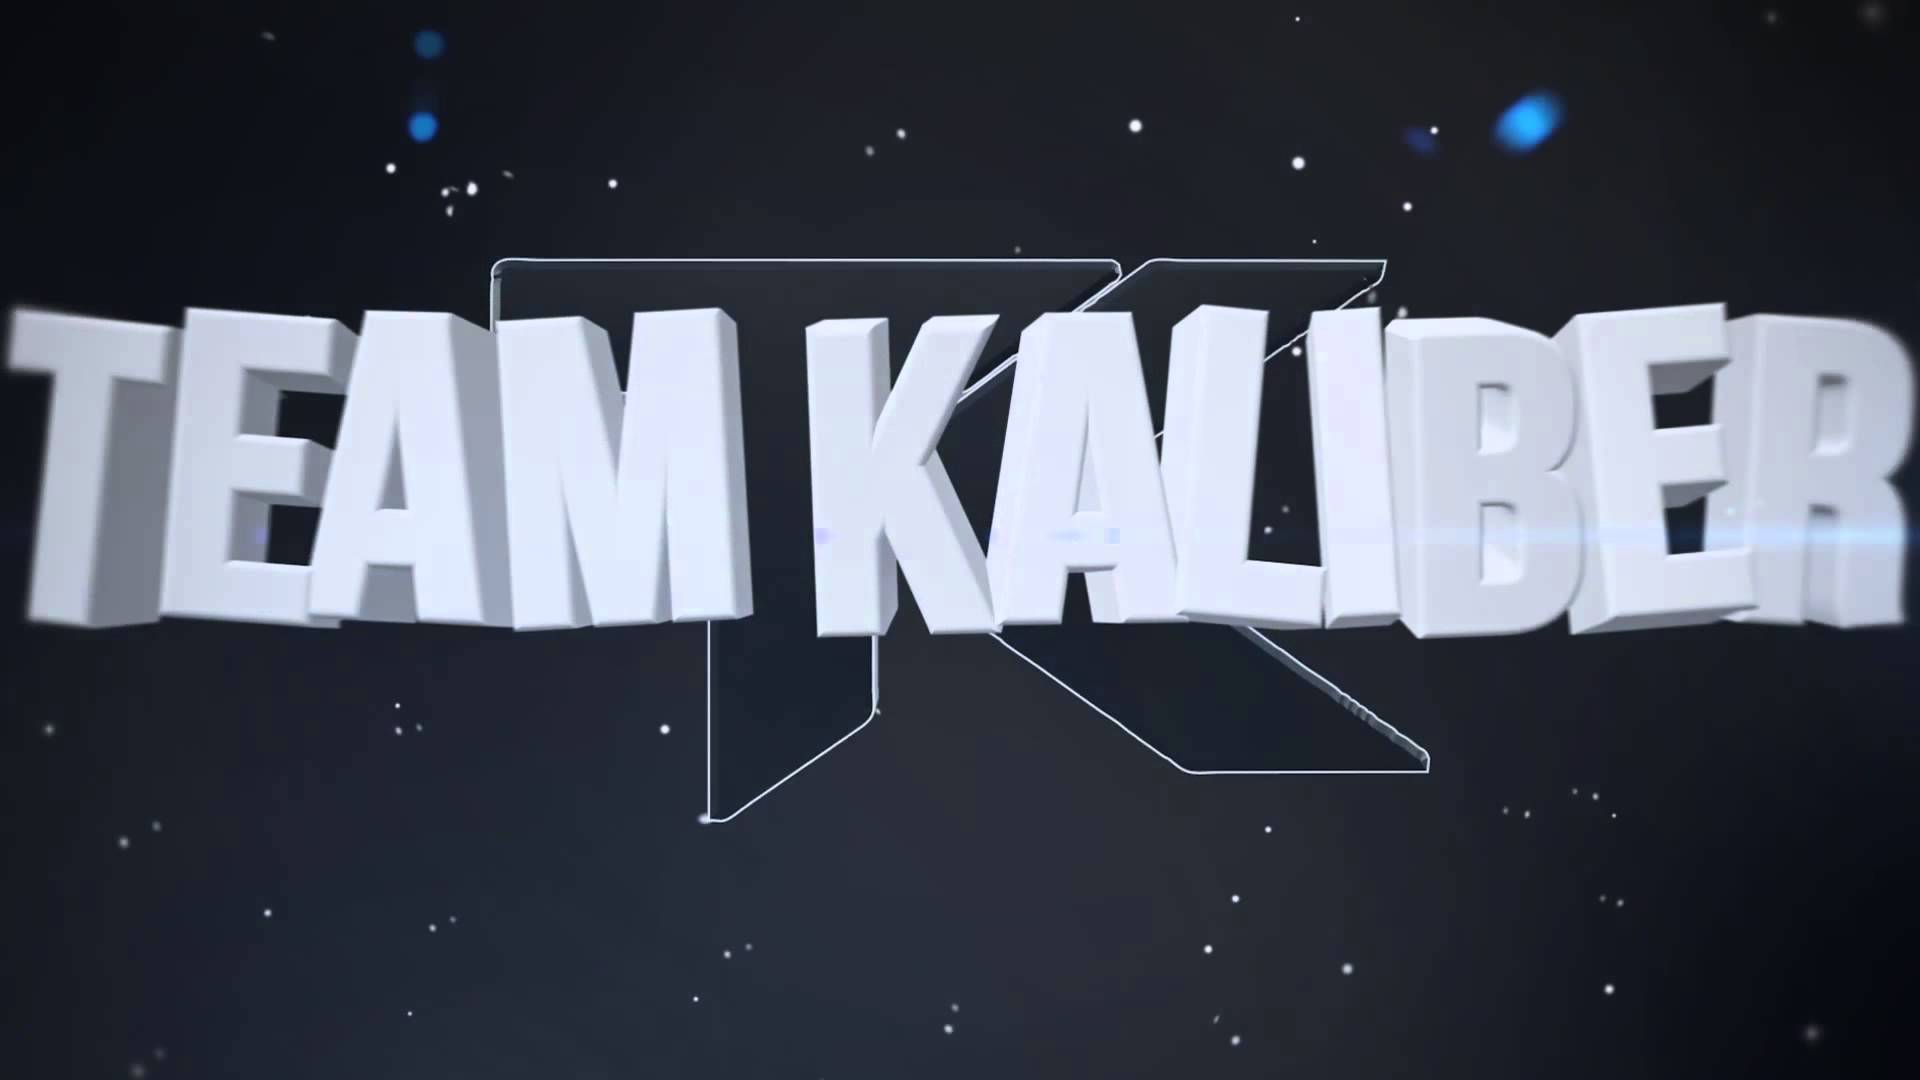 Team Kaliber Logo - Team Kaliber Wallpaper - Shared by Alessandro | Scalsys